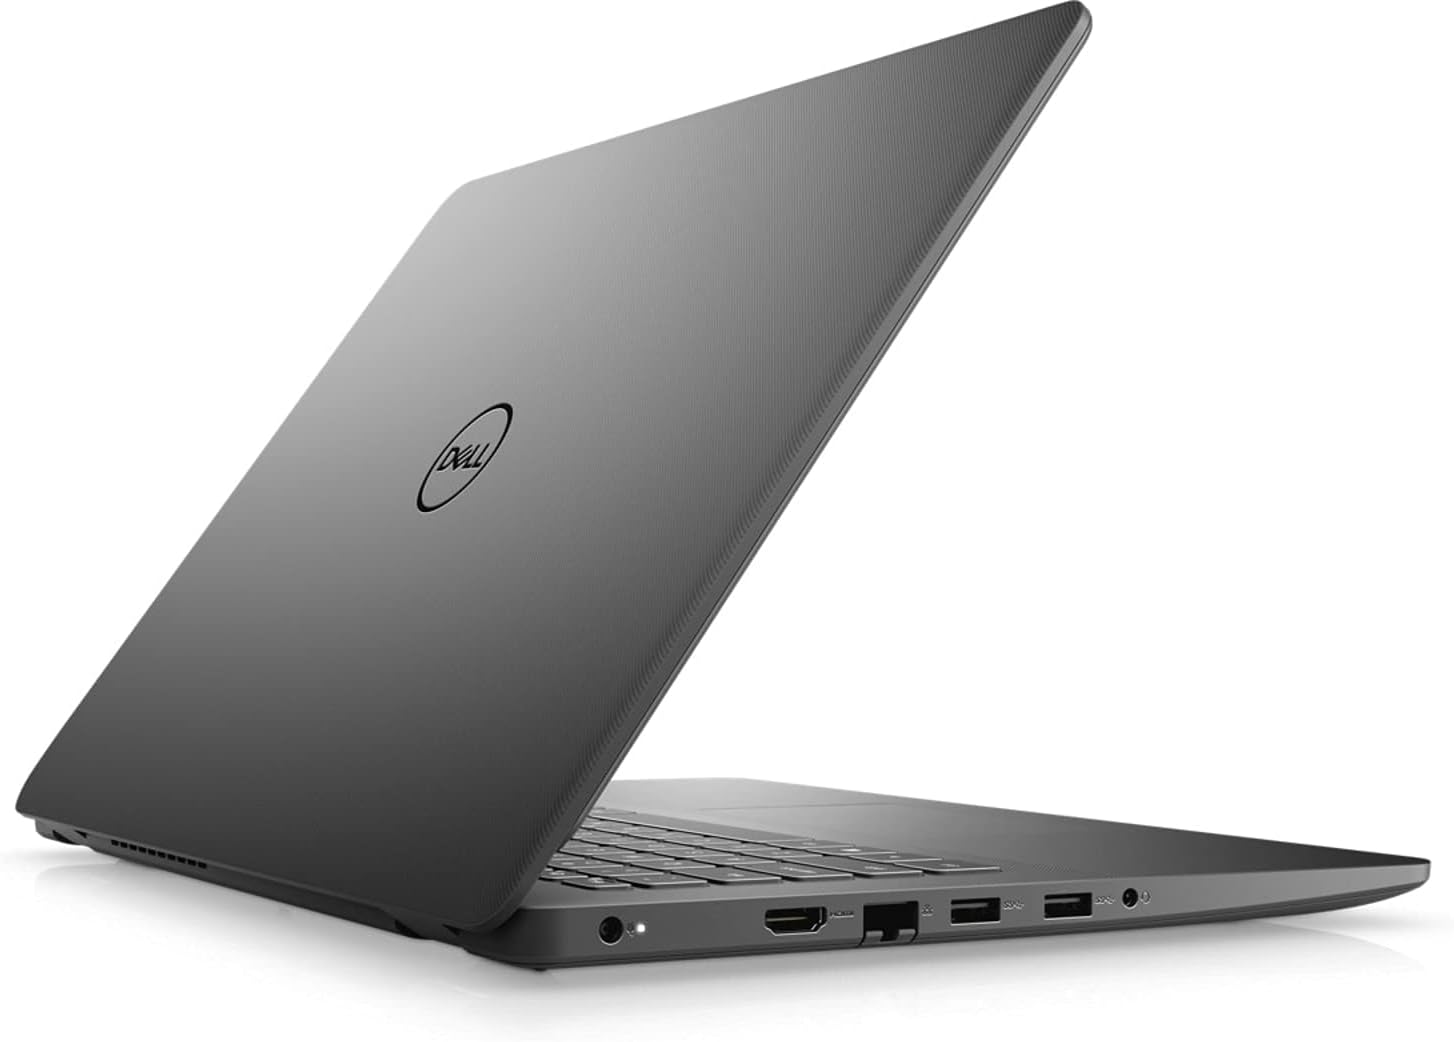 Laptop Dell Vostro 3400, i3 1115G4, 11Va Gen, 3.0Ghz, Ram 8Gb,  Disco SSD NVEMe 256Gb +1Tb HDD, Pantalla 14."HD, Intel ® UHD Graphics,  Web cam, Dvd Writer, W10H, Color negro, Nueva, garantia 1 año